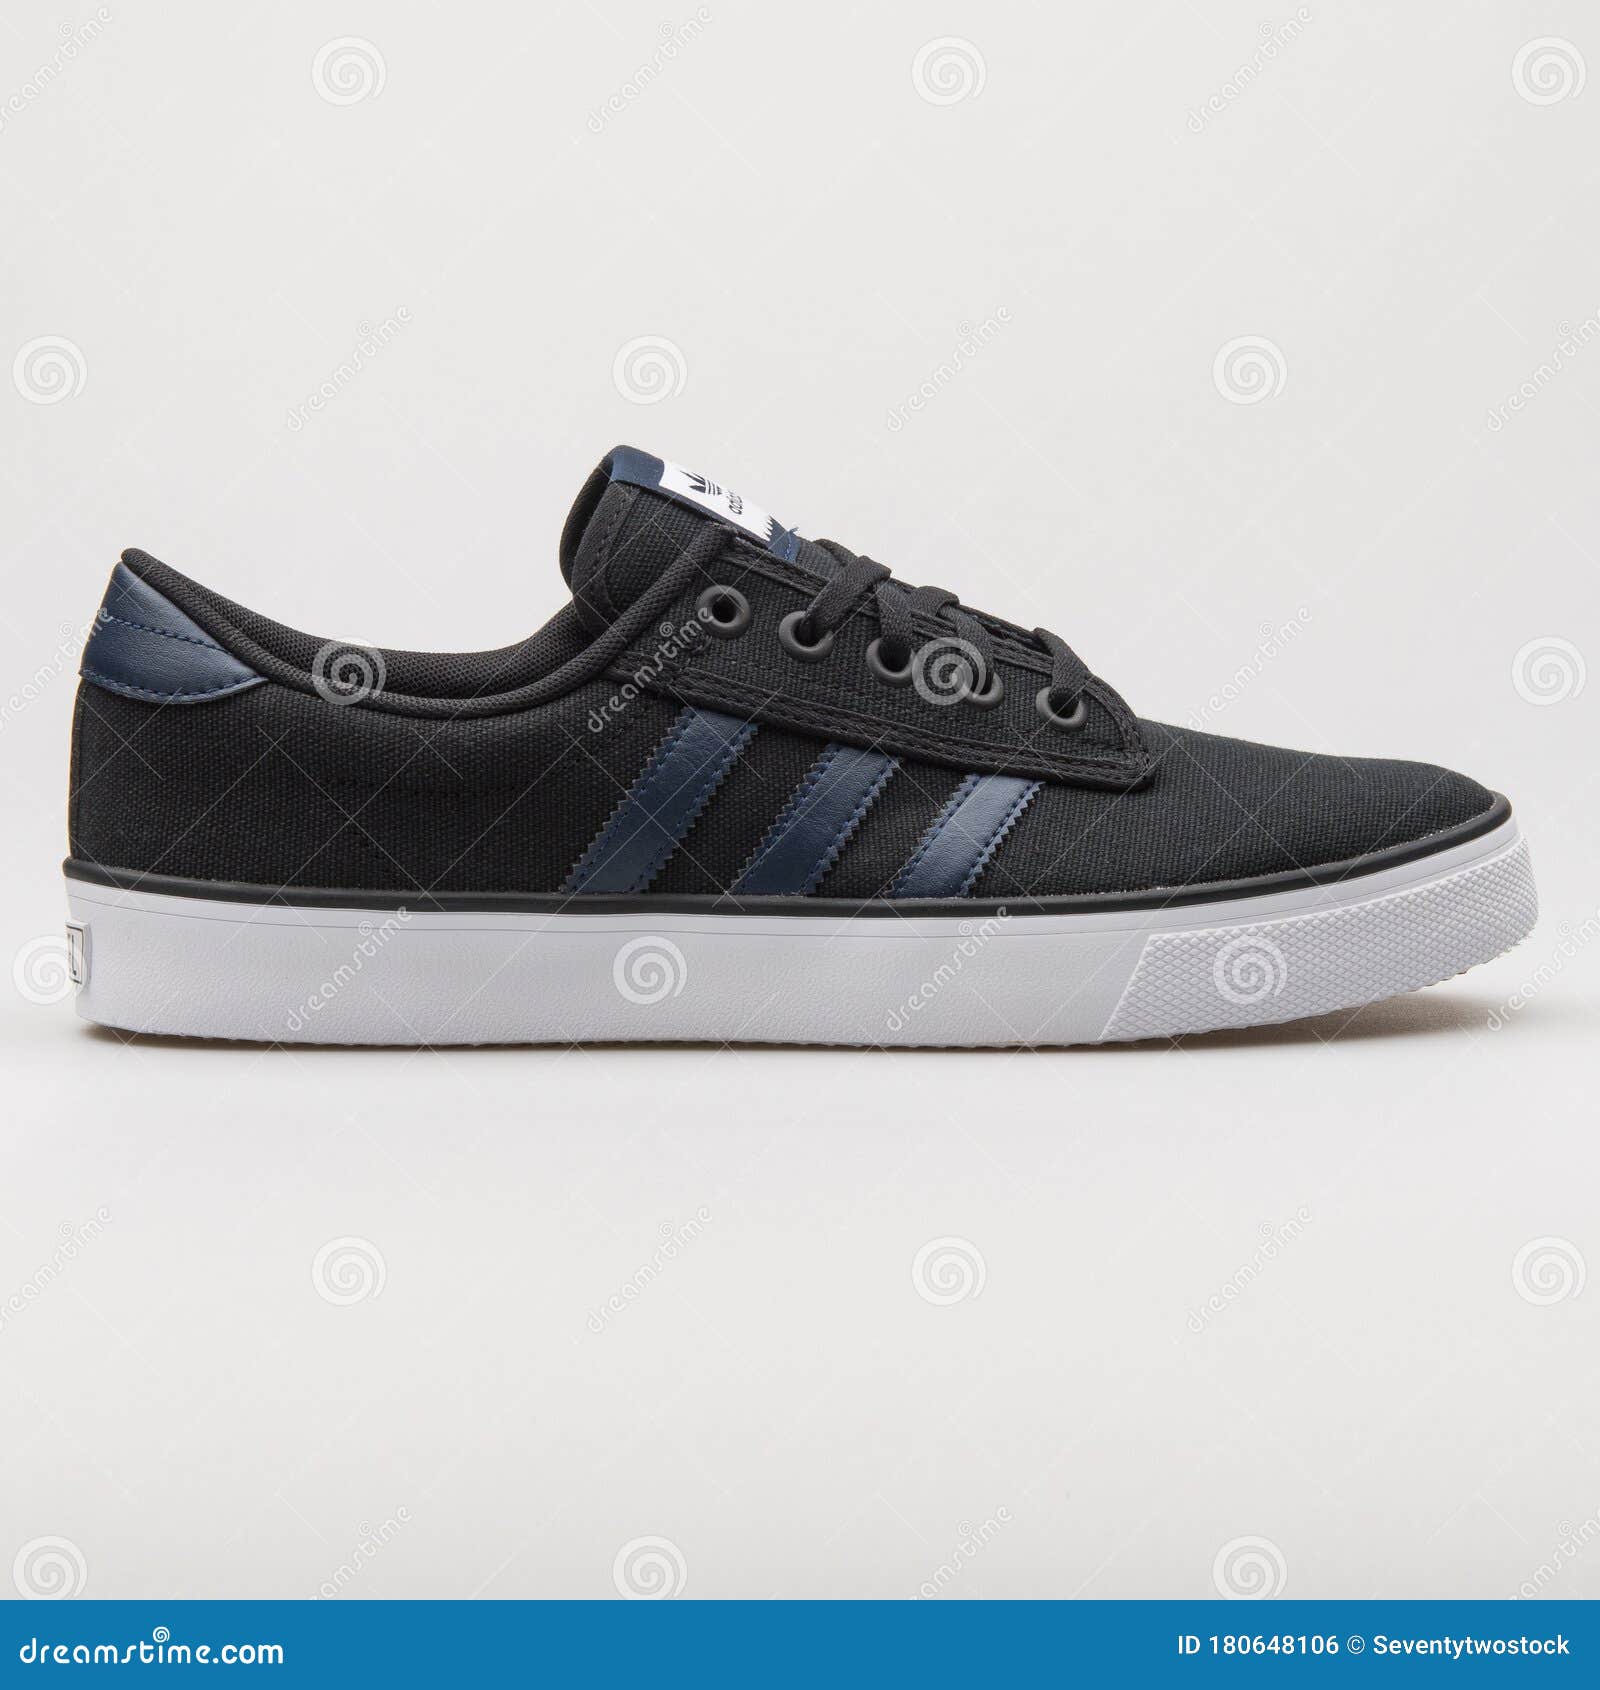 Adidas Kiel Black, Navy Blue and White Sneaker Editorial Photo - Image of background: 180648106